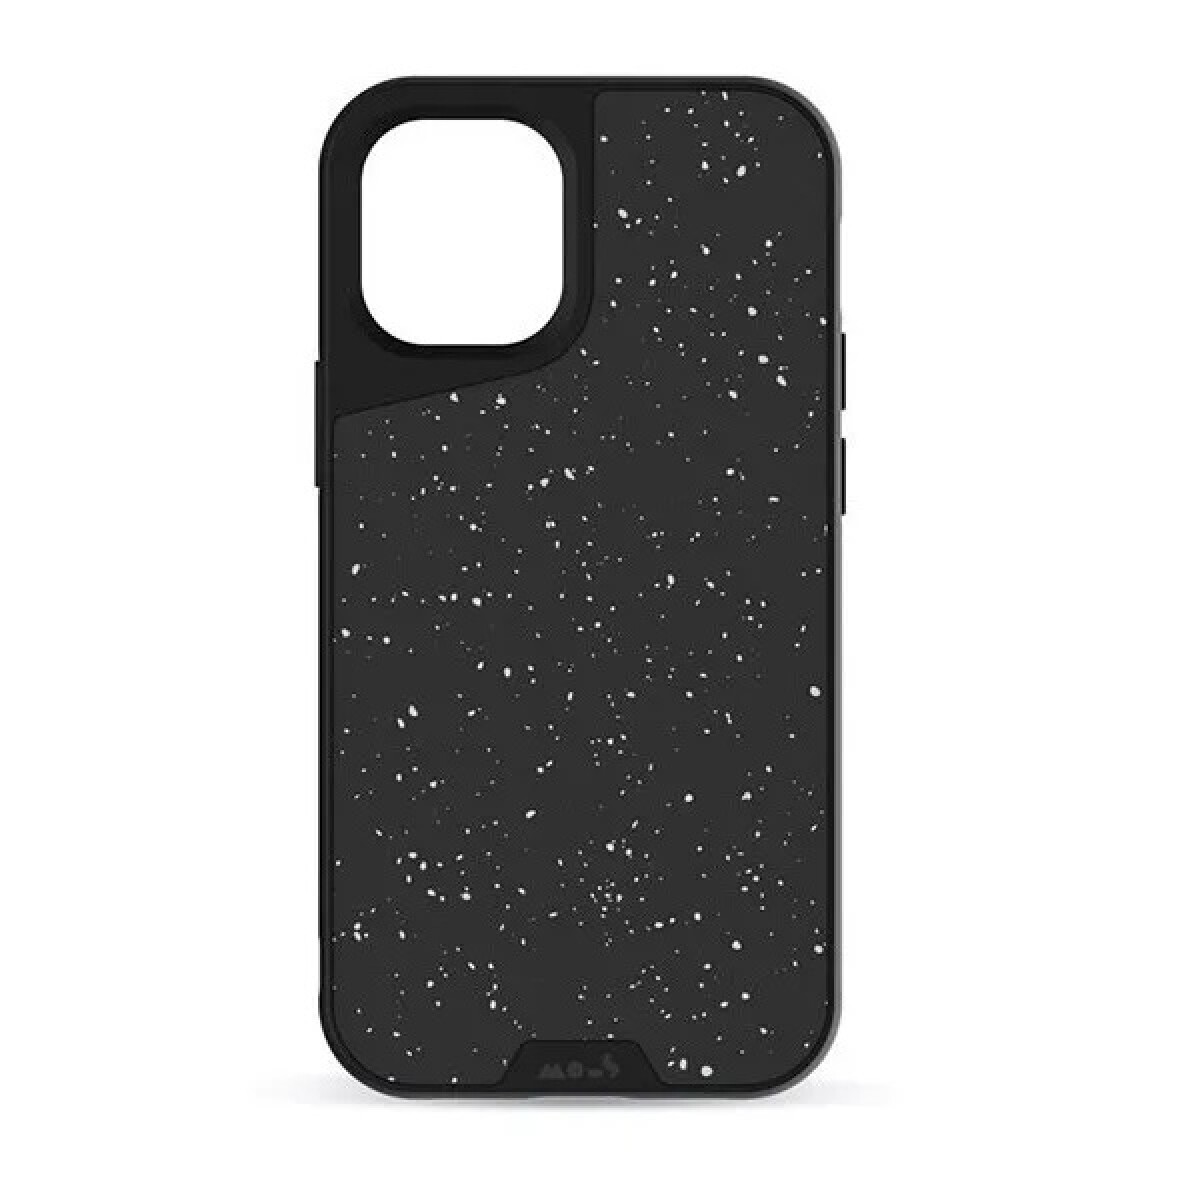 Iphone 12/ 12 Pro Case Black Speckled Mous 